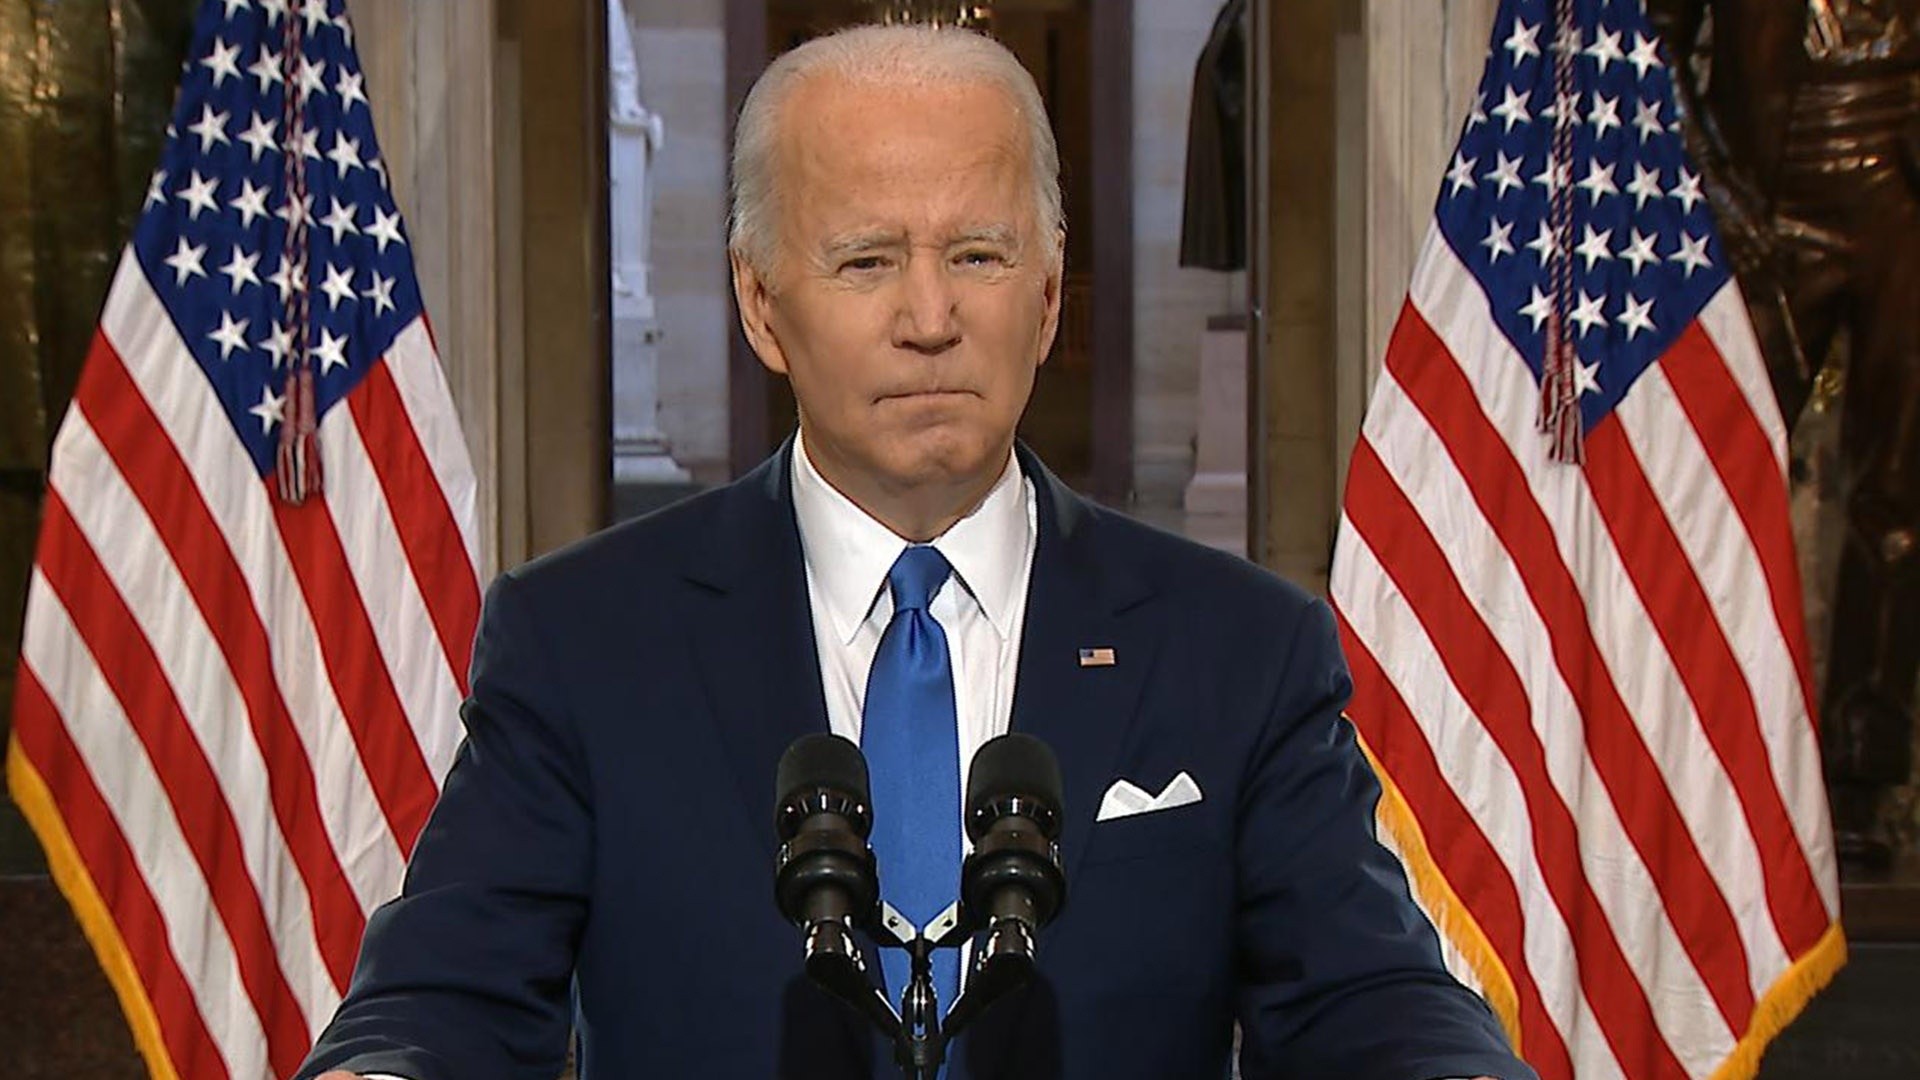 Watch President Biden’s full speech marking the anniversary of Jan. 6 attack